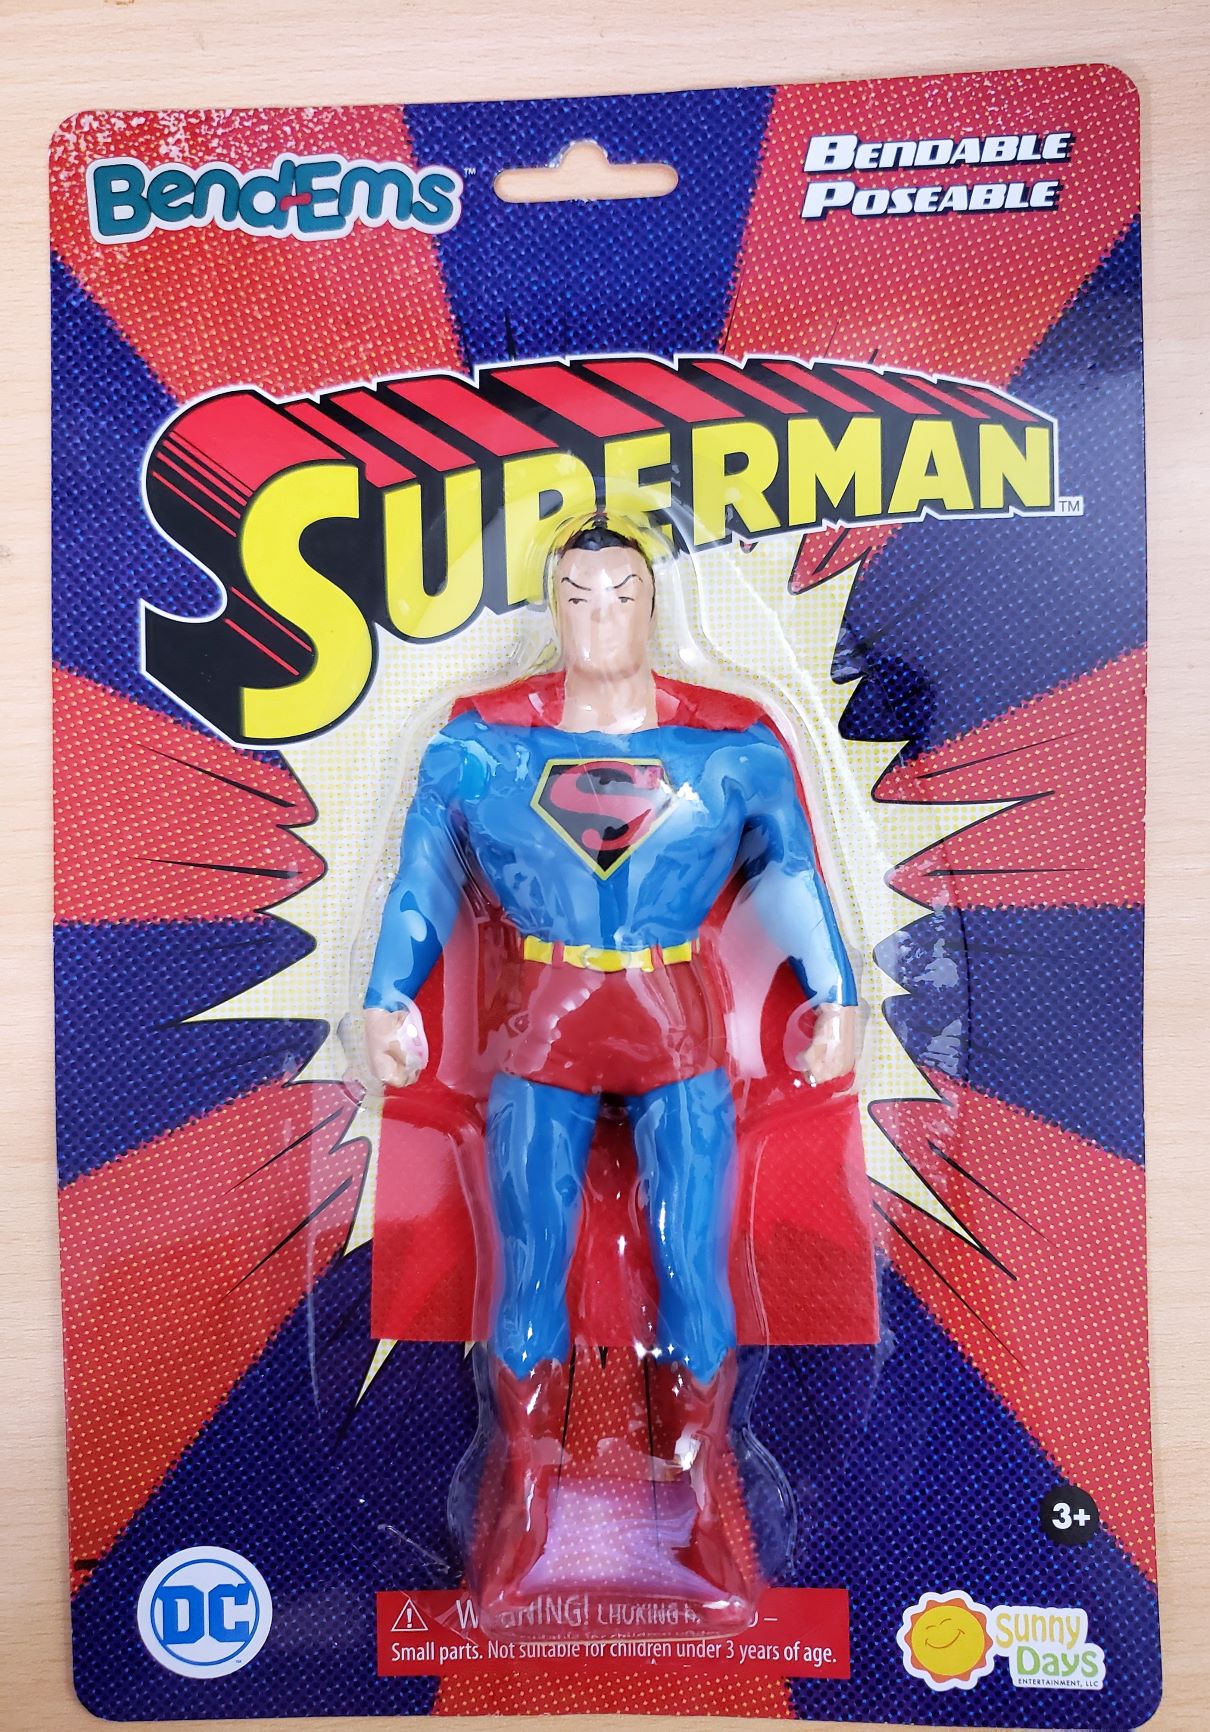 sunny-day-dc-comics-bendems-superman-01.jpg